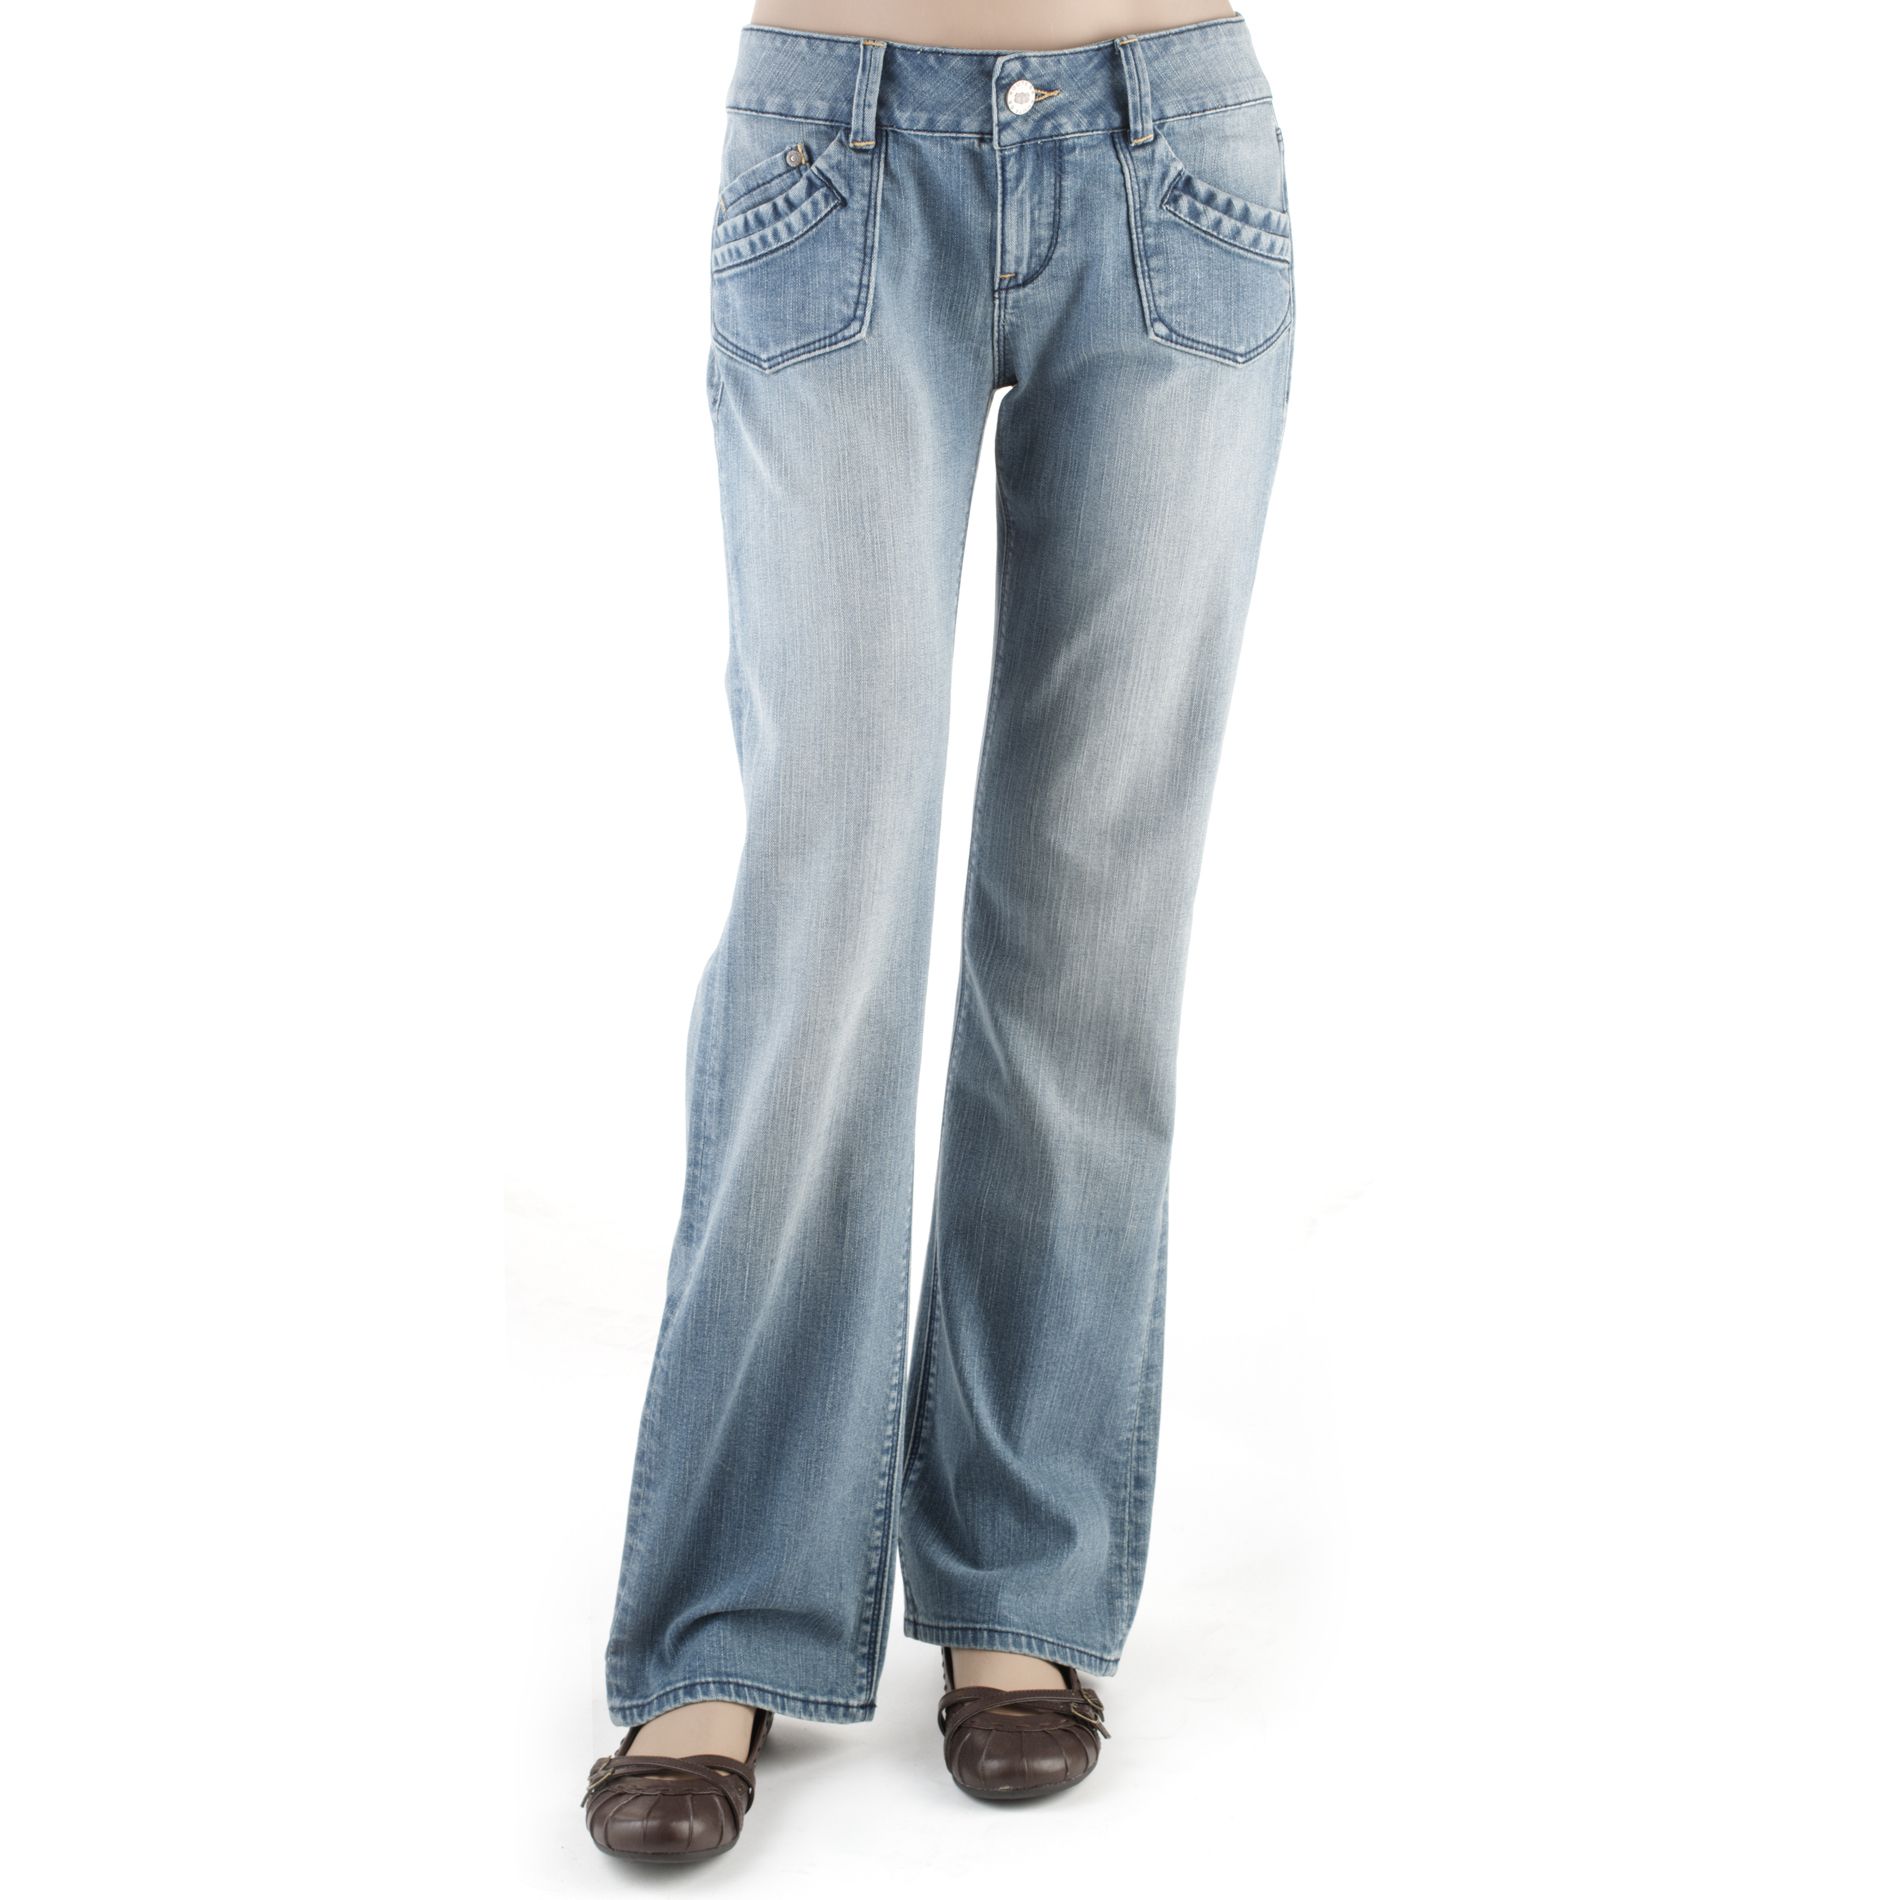 Route 66 Women's Pork Chop Pocket Skinny Jeans